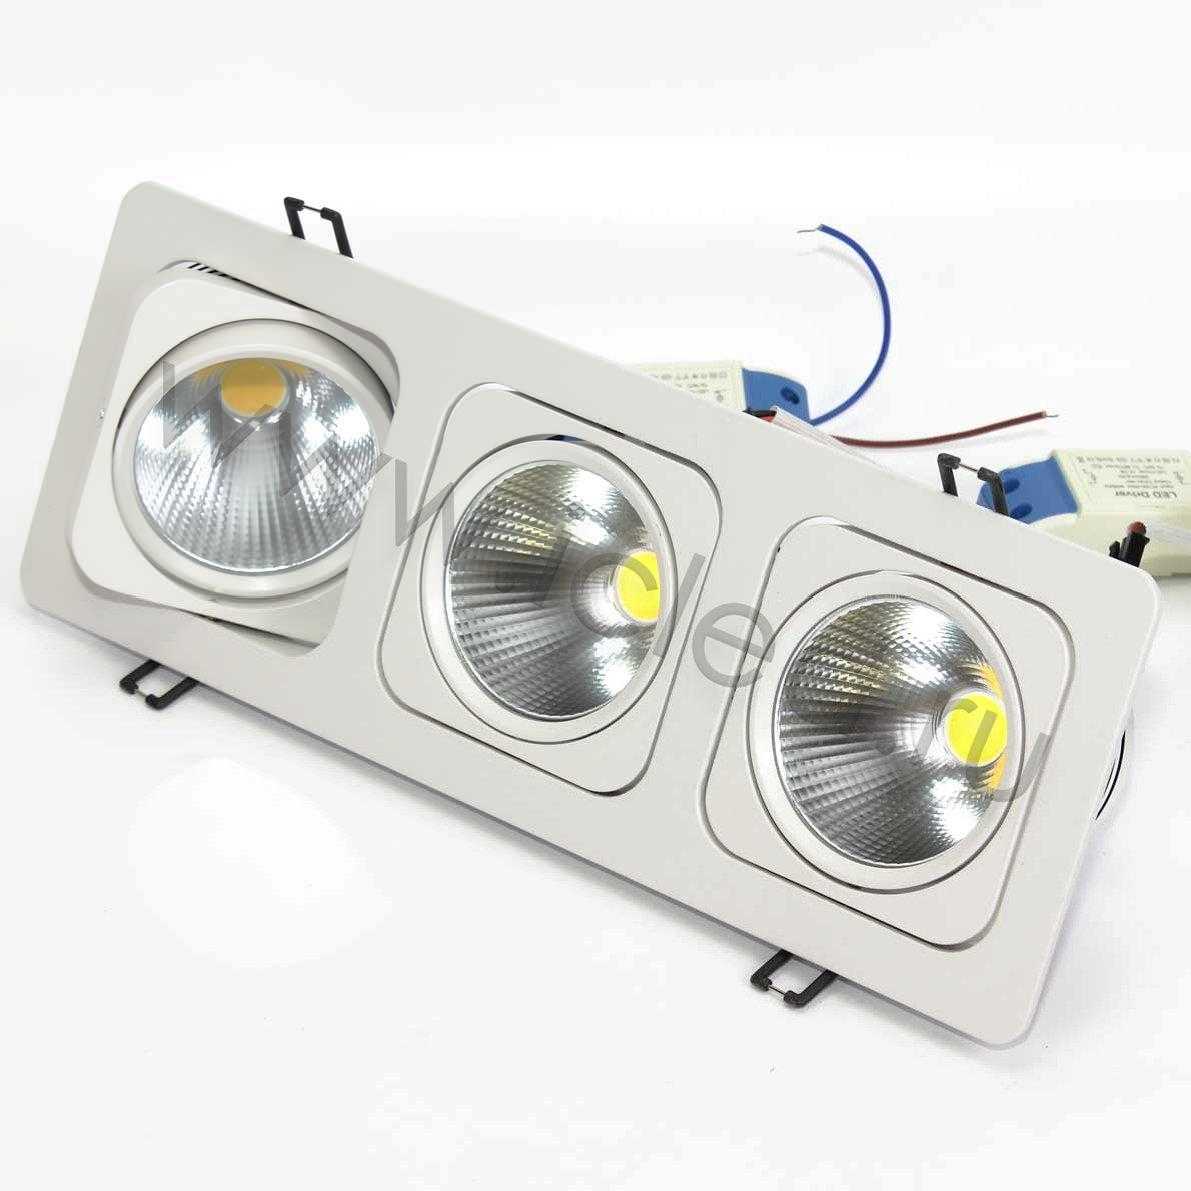 Светодиодные светильники Светодиодный светильник встраиваемый 120.3 series white housing BW137 (30W, 220V, day white)